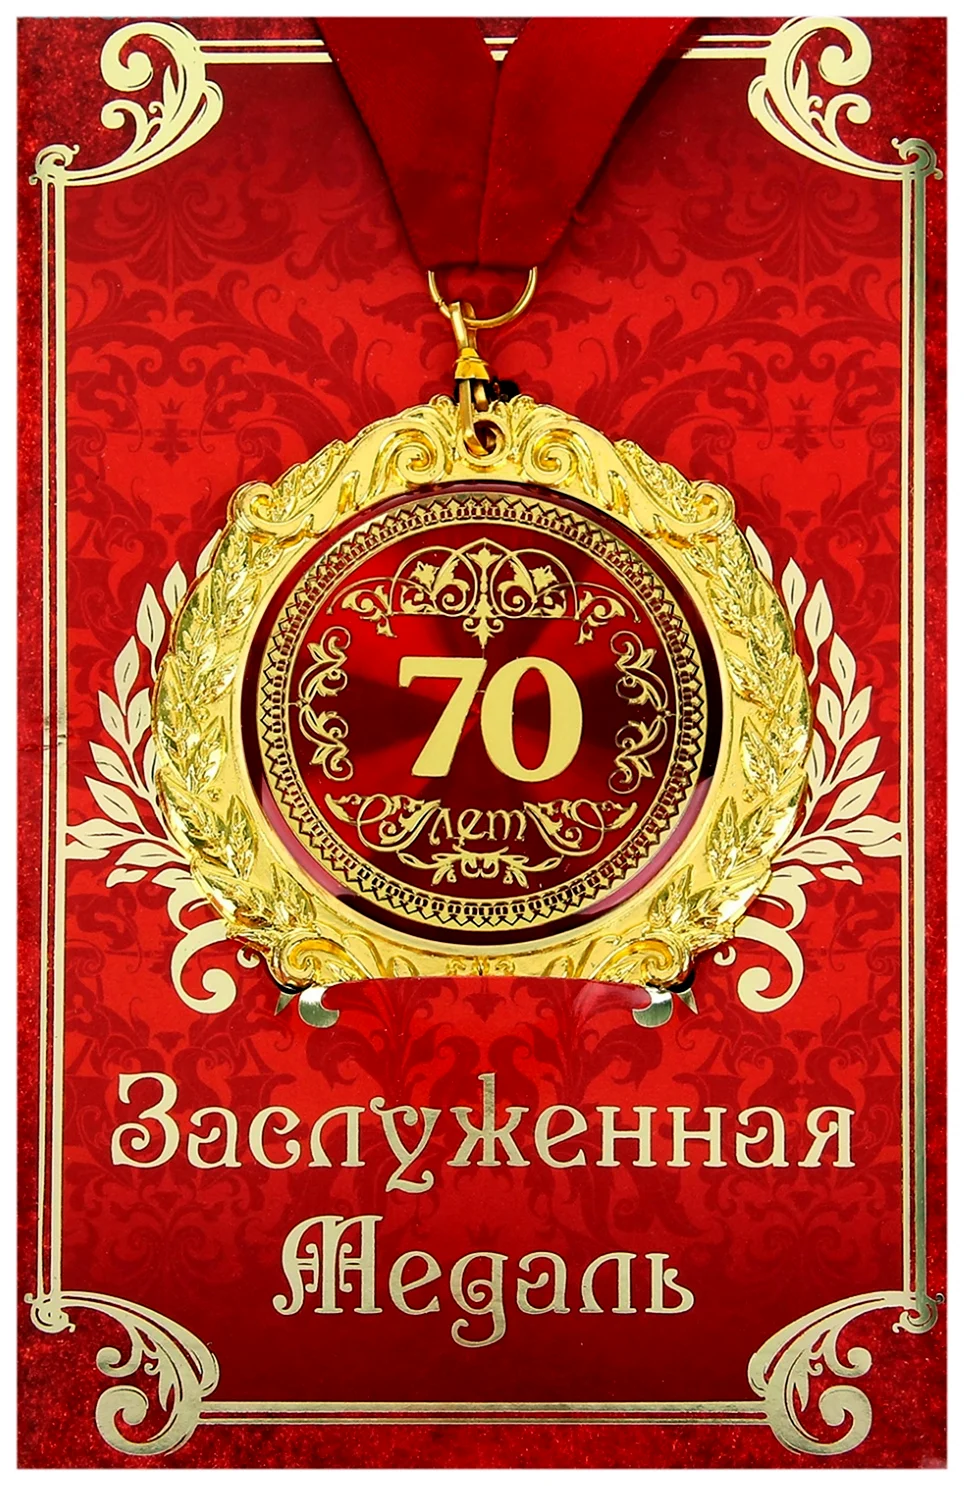 Медаль 30 лет. Открытка для мужчины